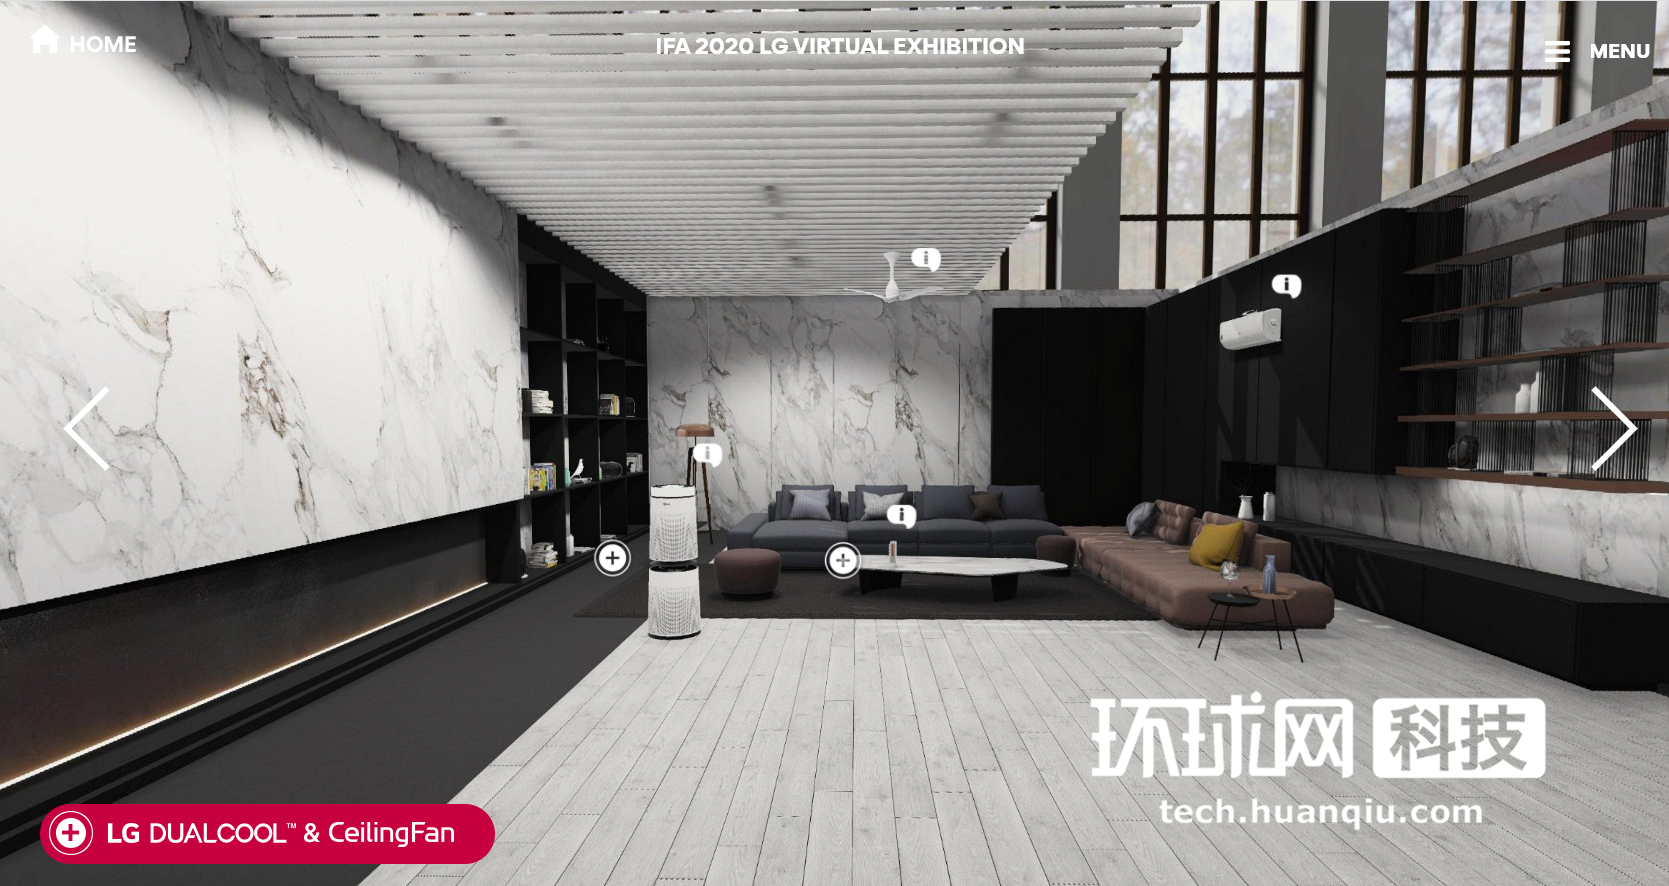 LG上线IFA虚拟展馆 为观众展示最新科技产品